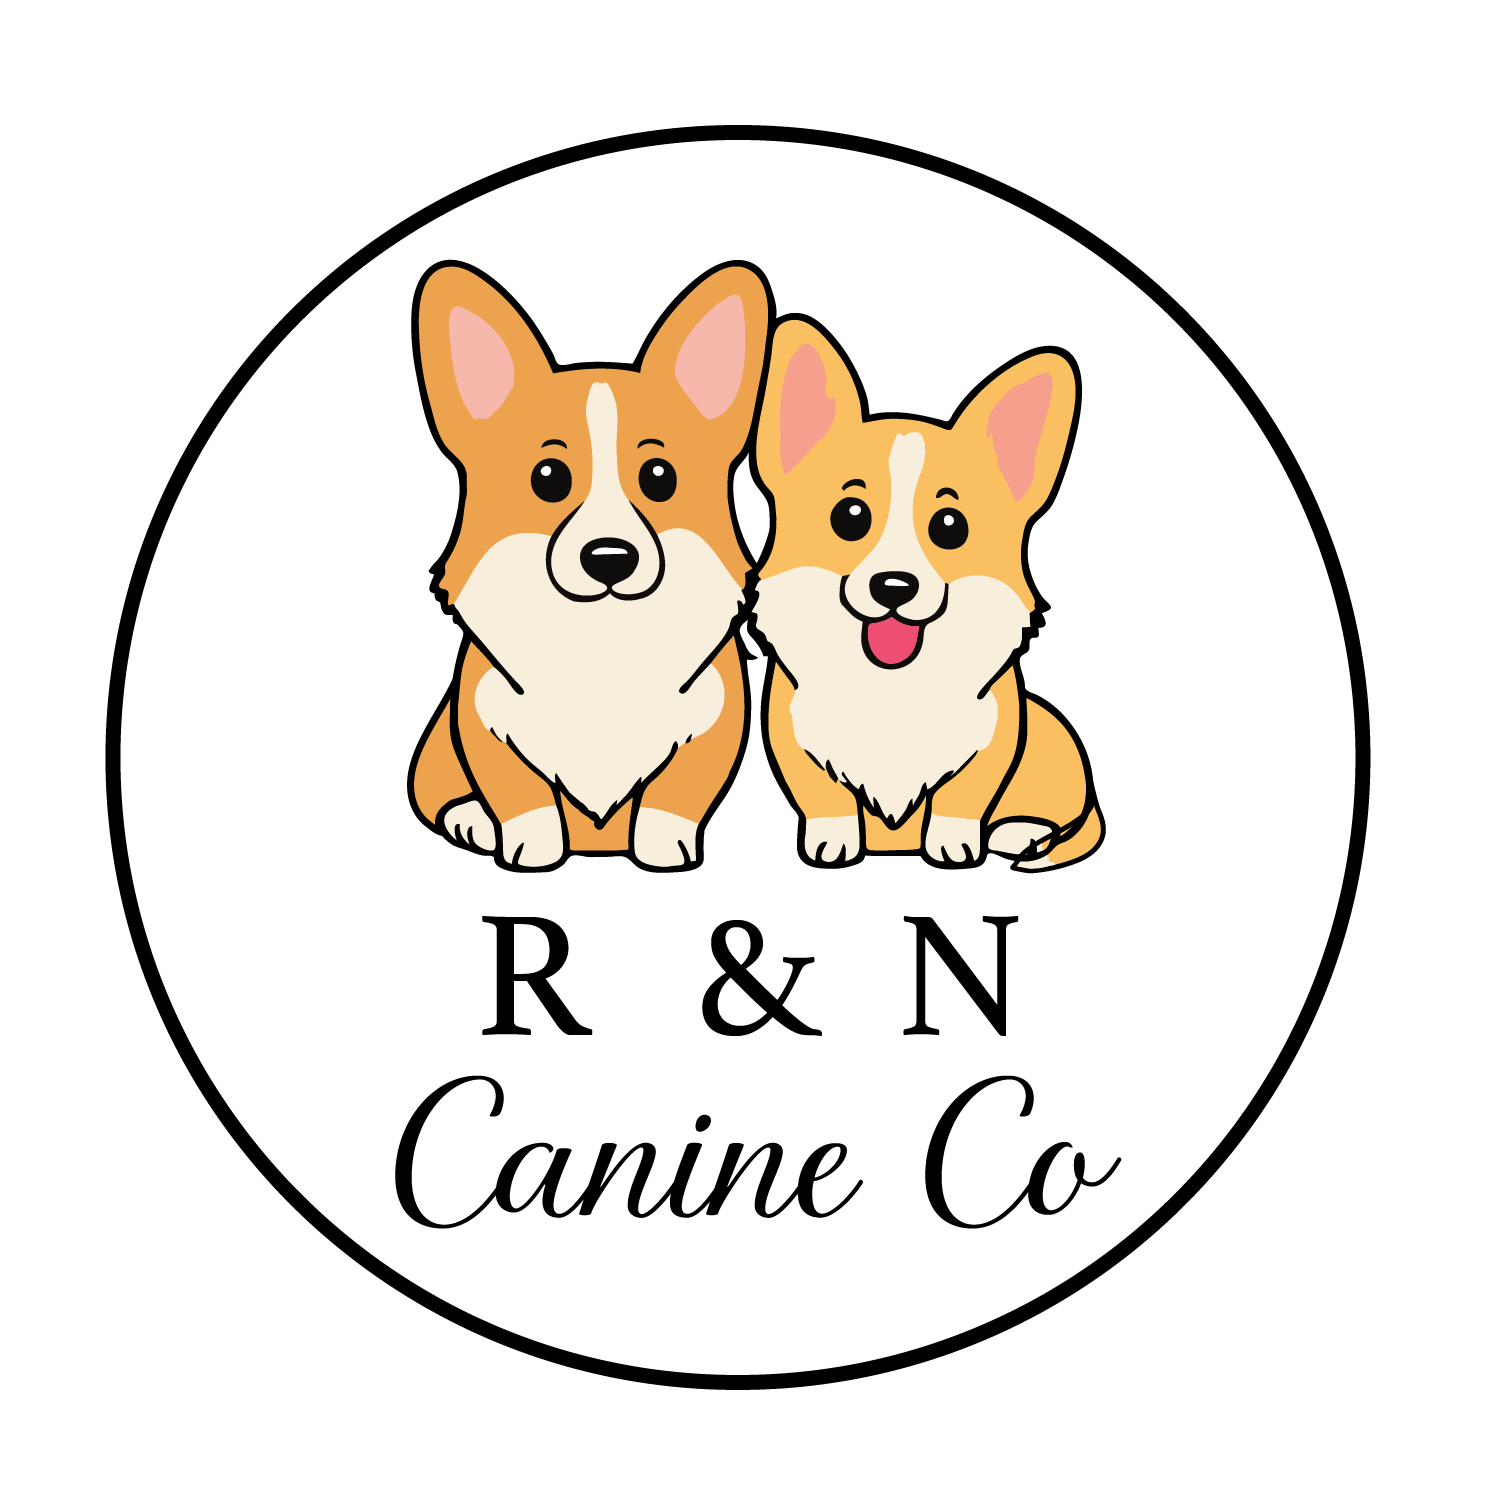 R & N Canine CO